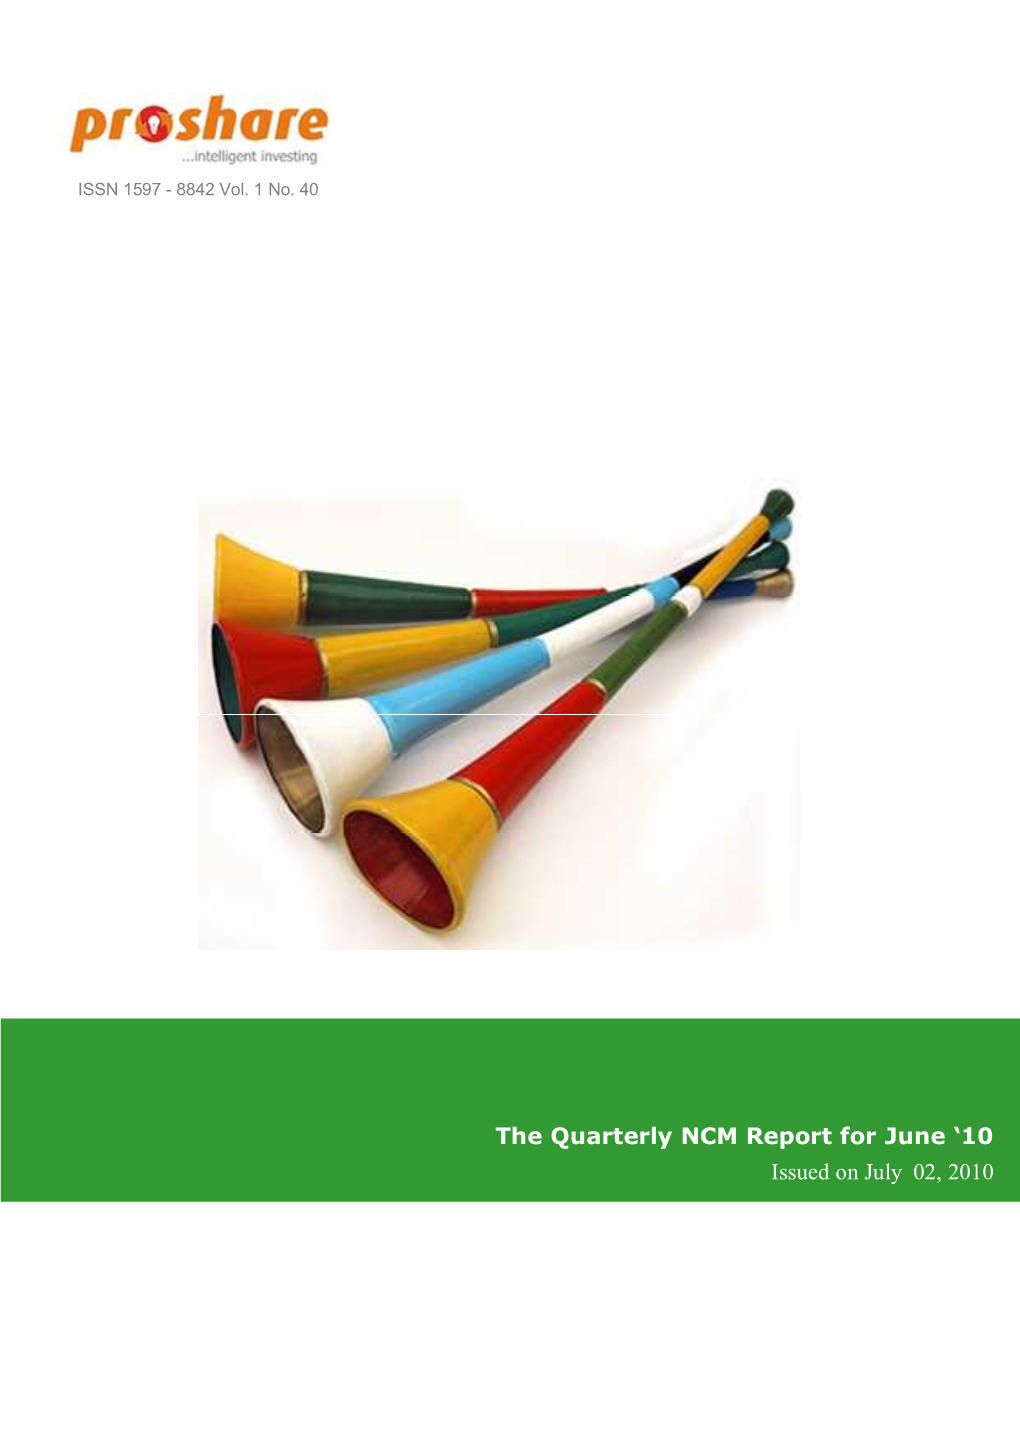 H1 2010 NCM Market Report